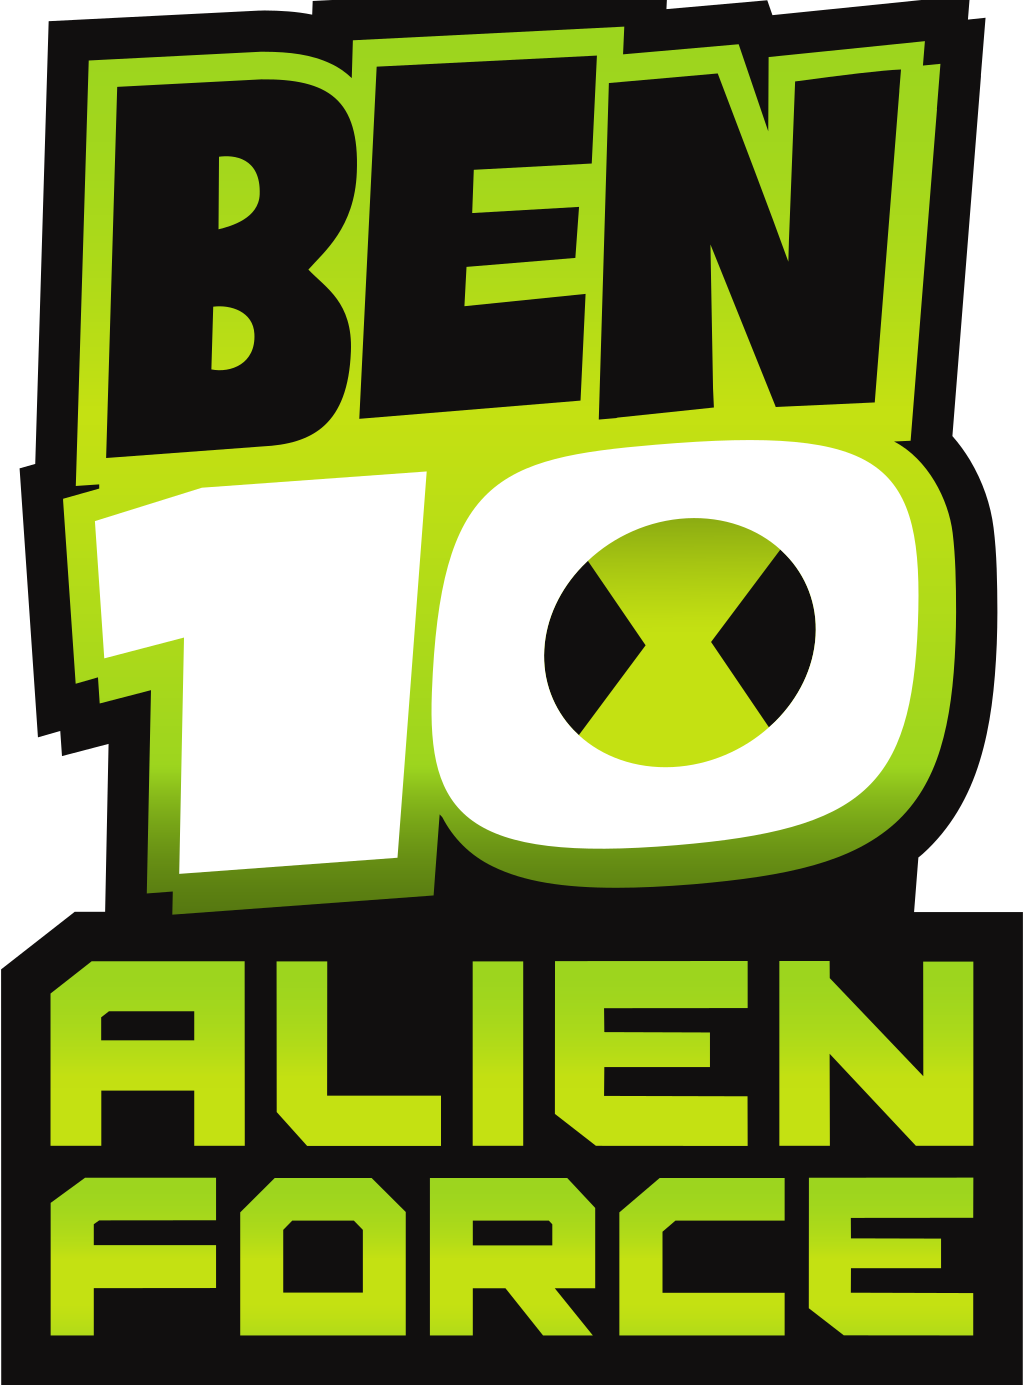 Ben 10: Alien Swarm - Transformations 